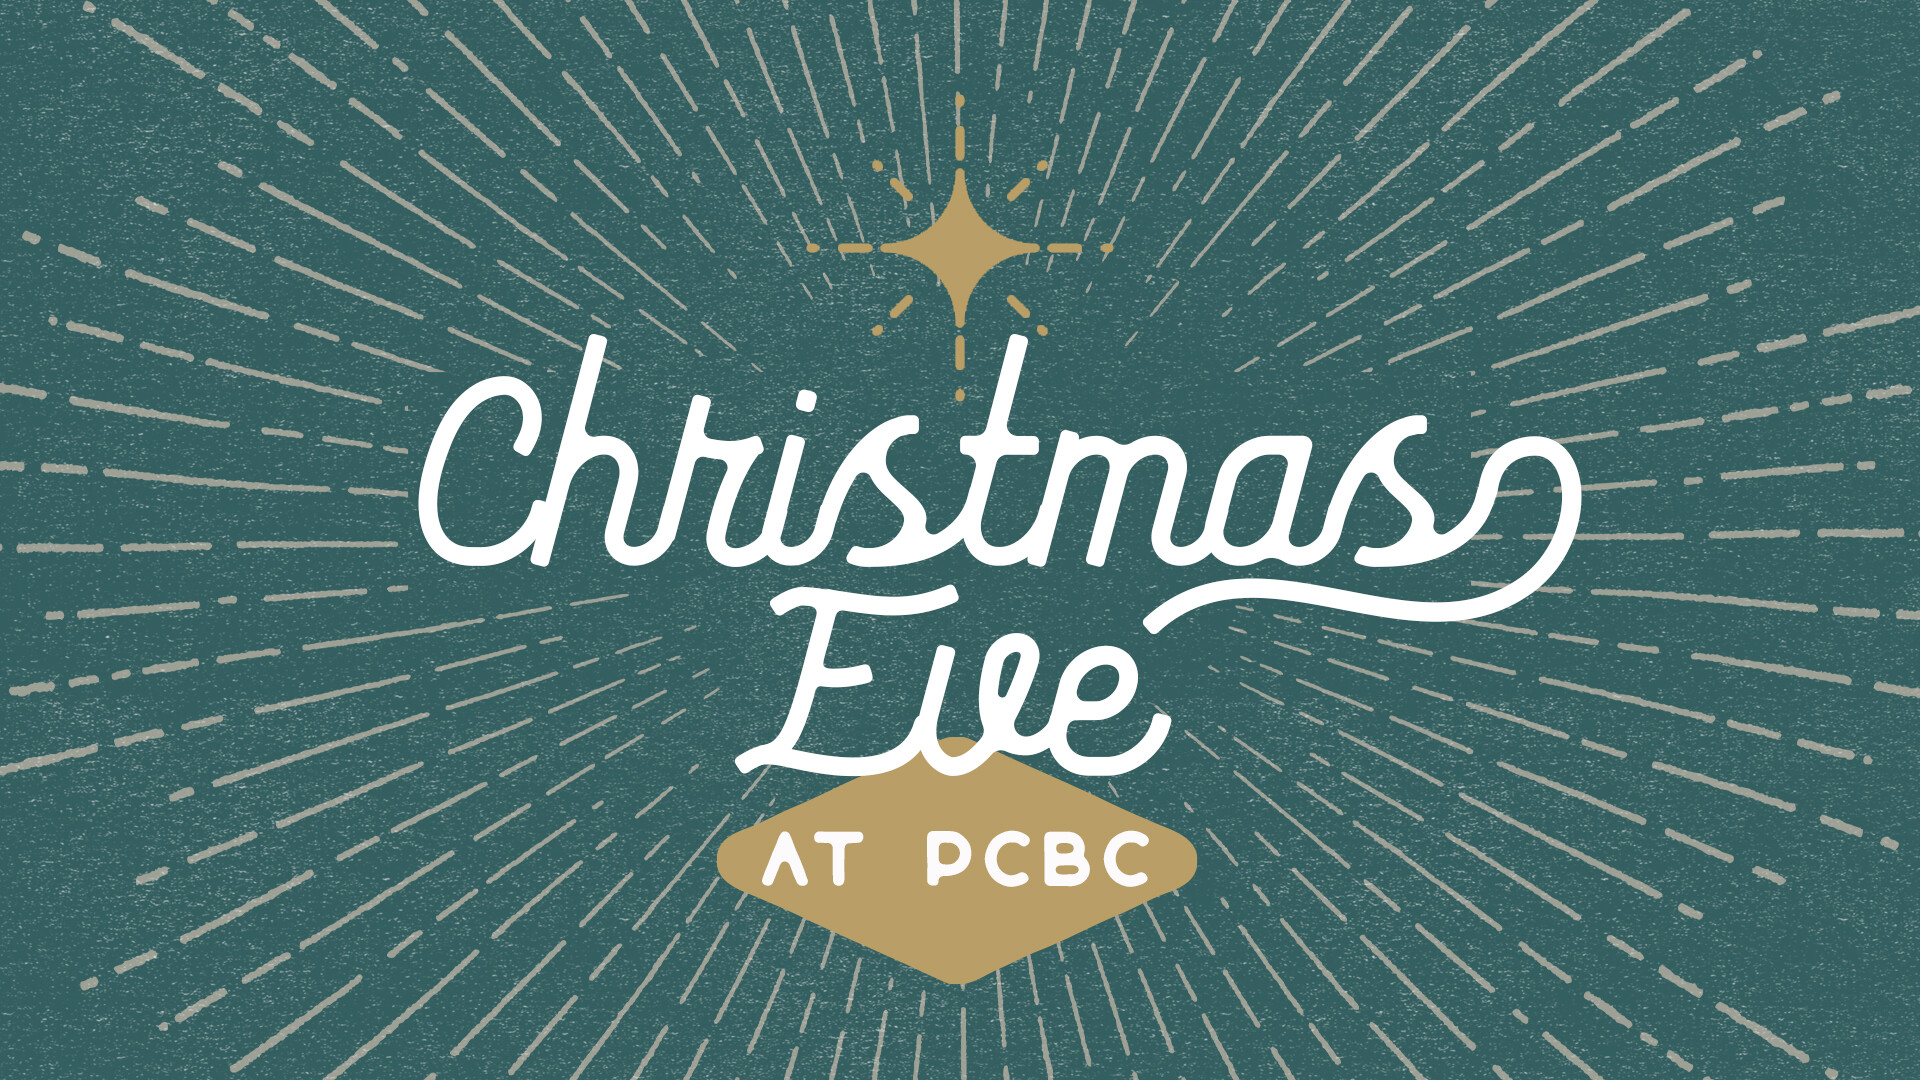 Christmas Eve Services at PCBC - Dec 24 5pm